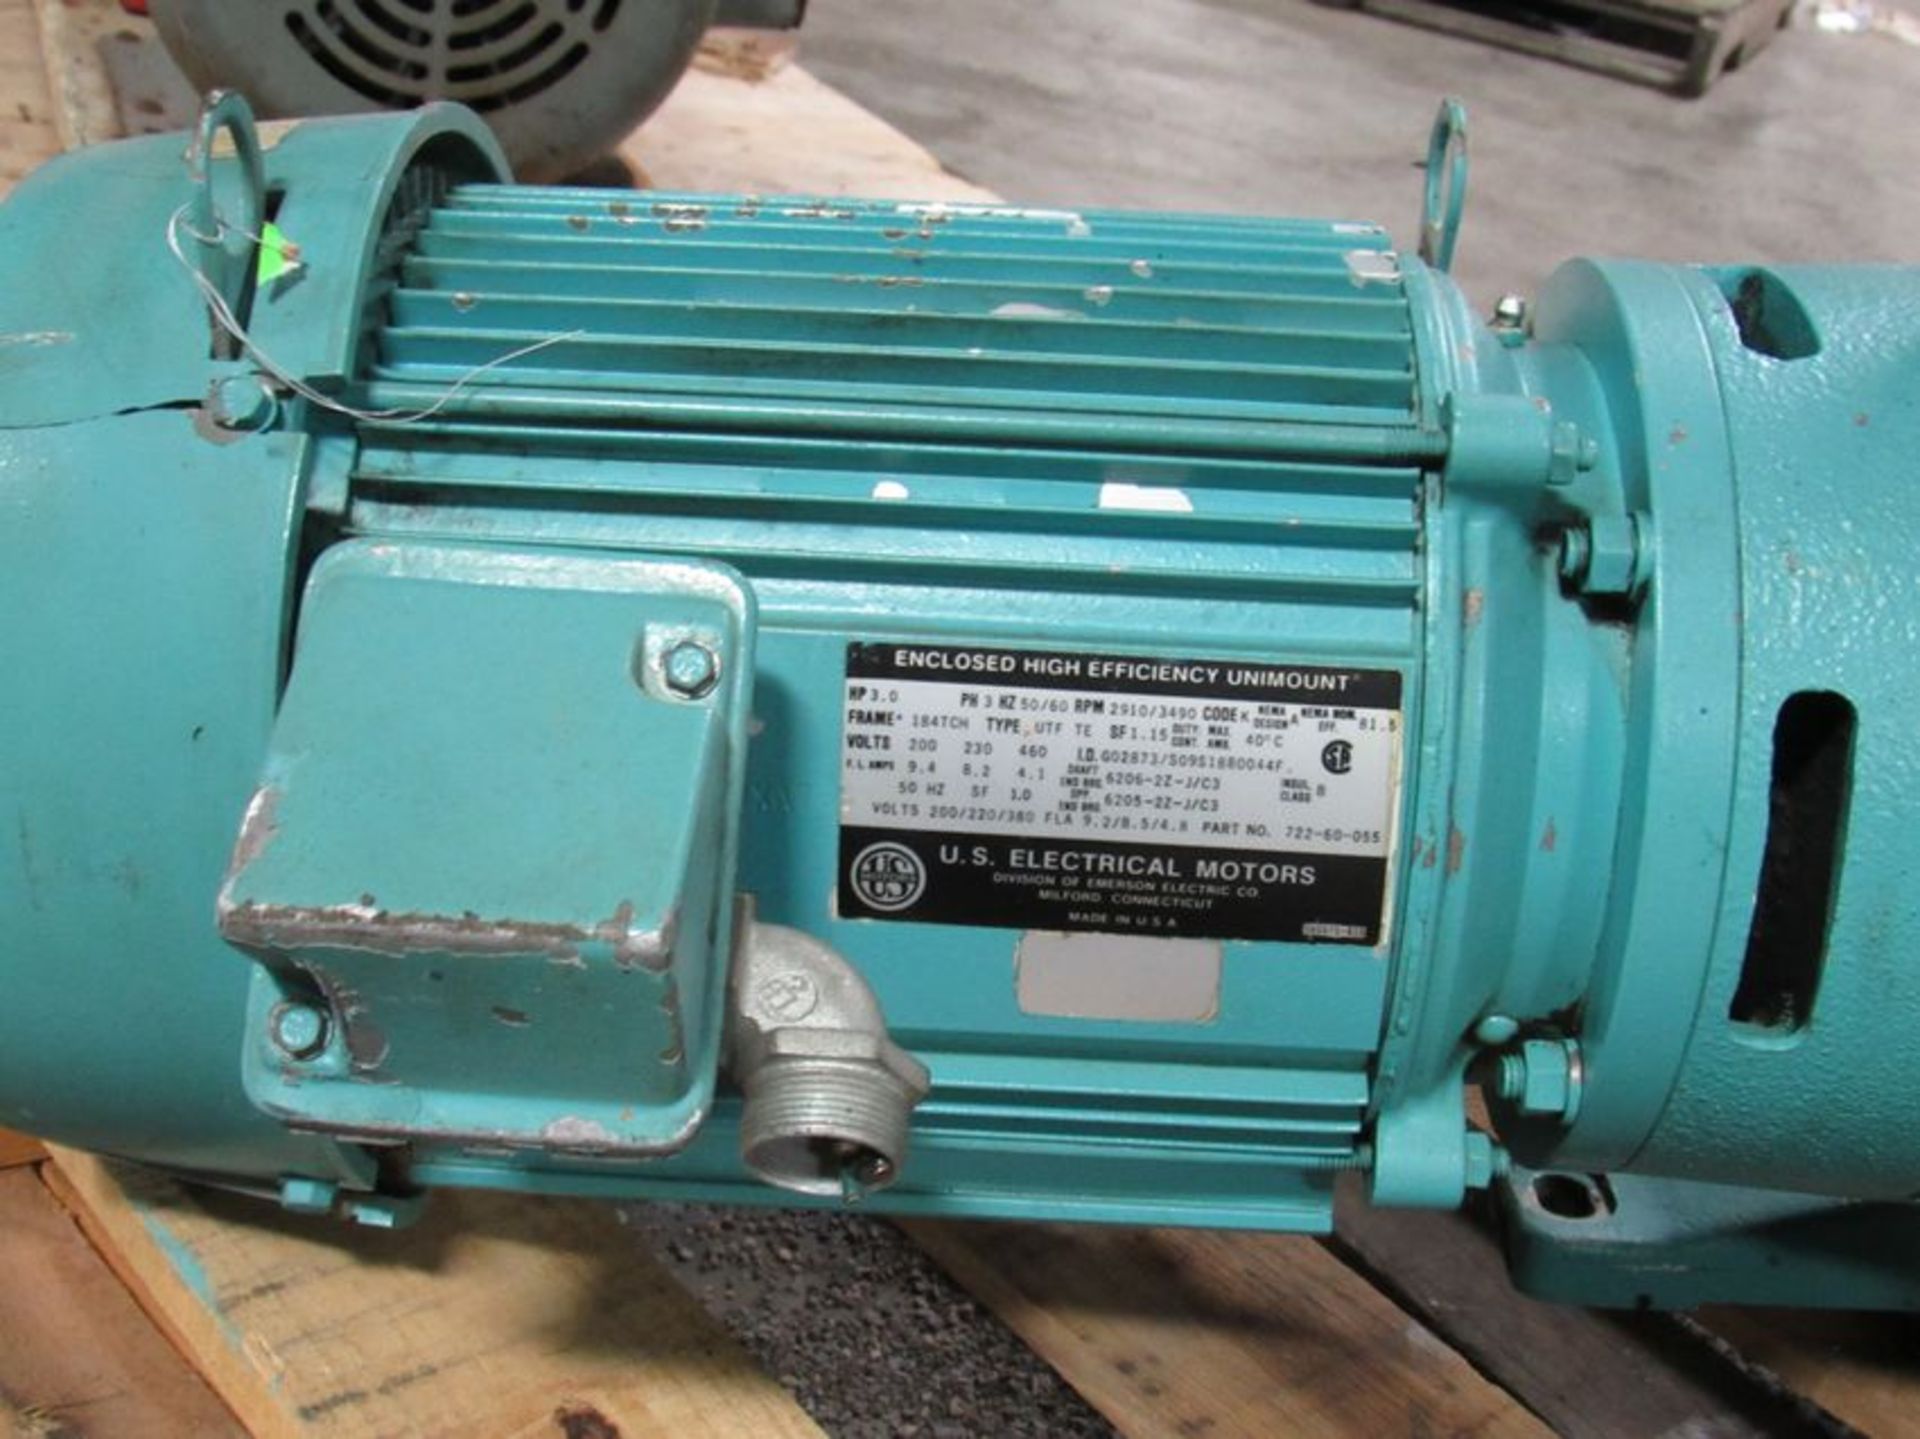 Ruvac Leybold Vacuum Pump Model WA501' Serial #L901200004 and 3HP Electric Motor, 200/230/460Volt. - Image 5 of 7